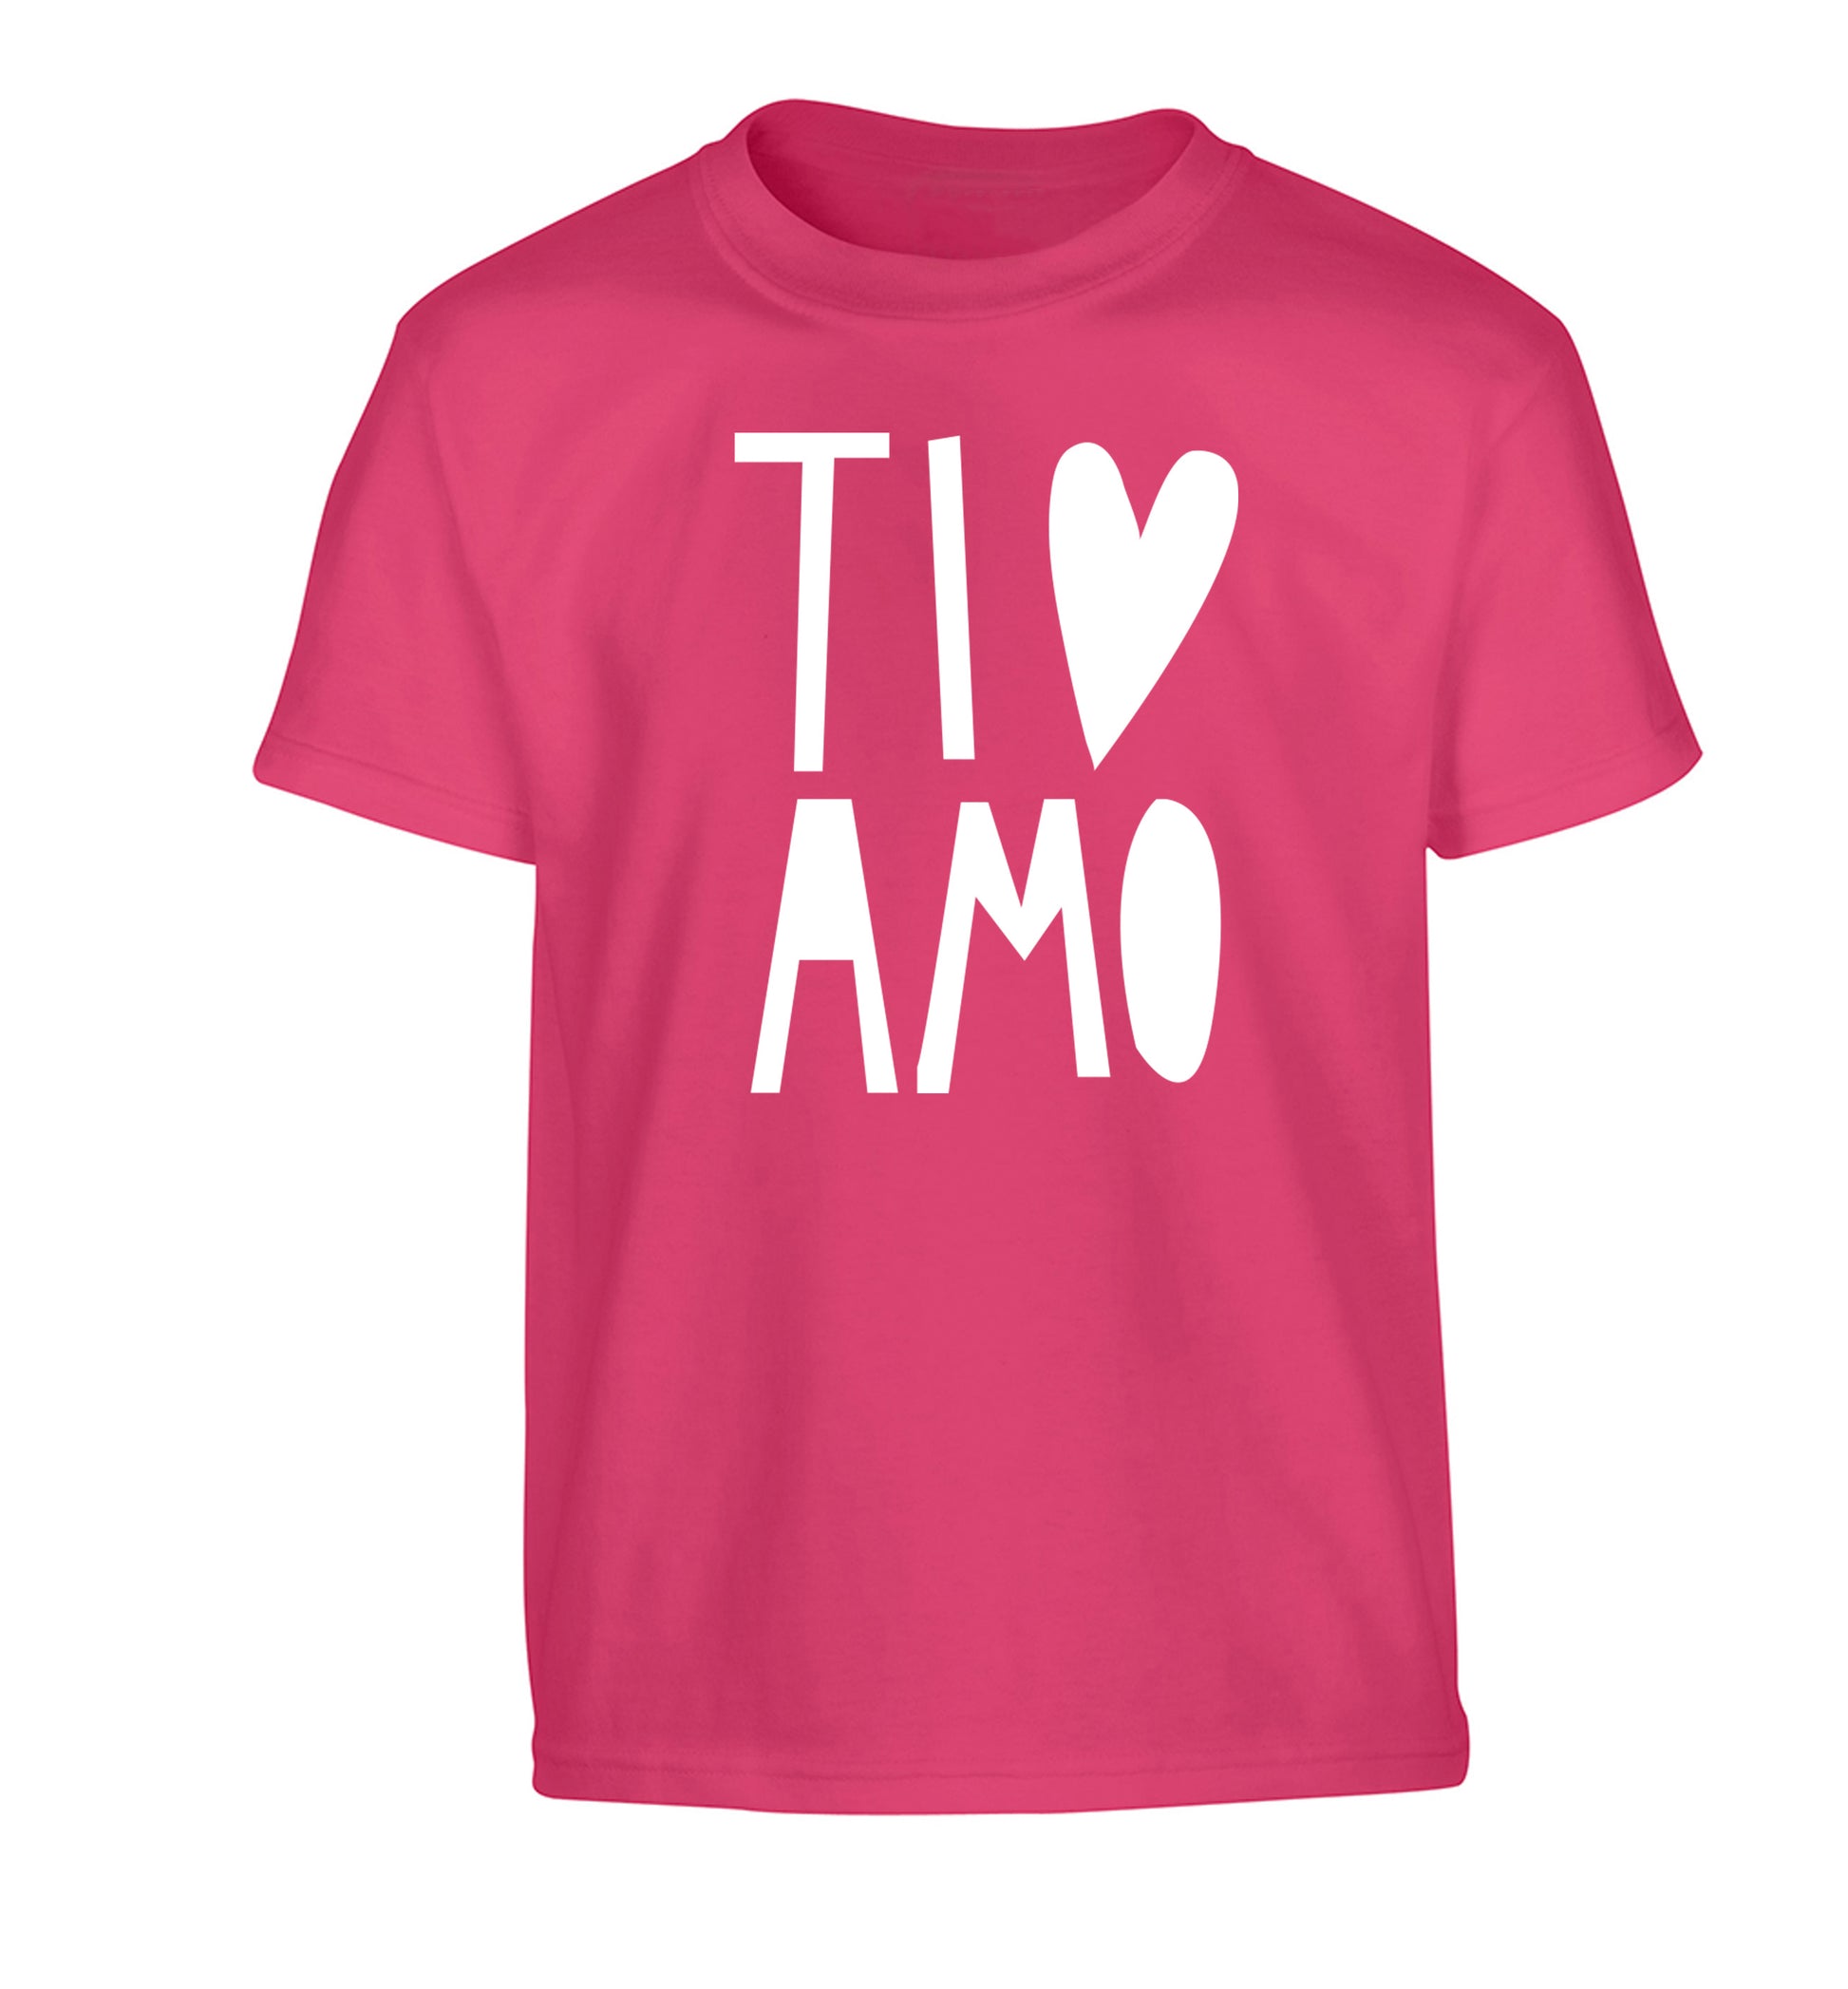 Ti amo - I love you Children's pink Tshirt 12-13 Years